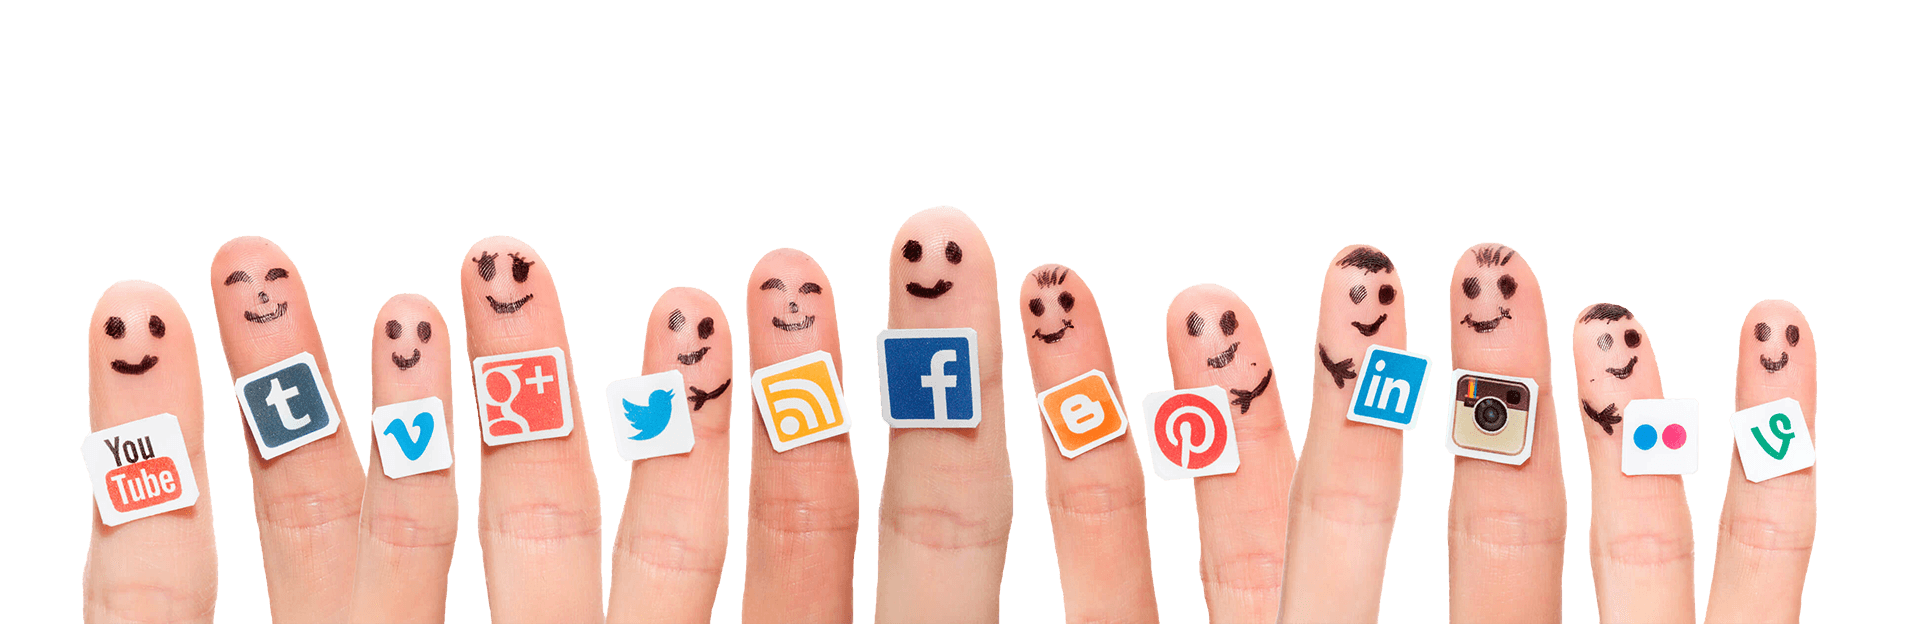 Social-Mídia-Gerenciamento-de-Rede-Social-Efeito-On-Agencia-Digital-dedos